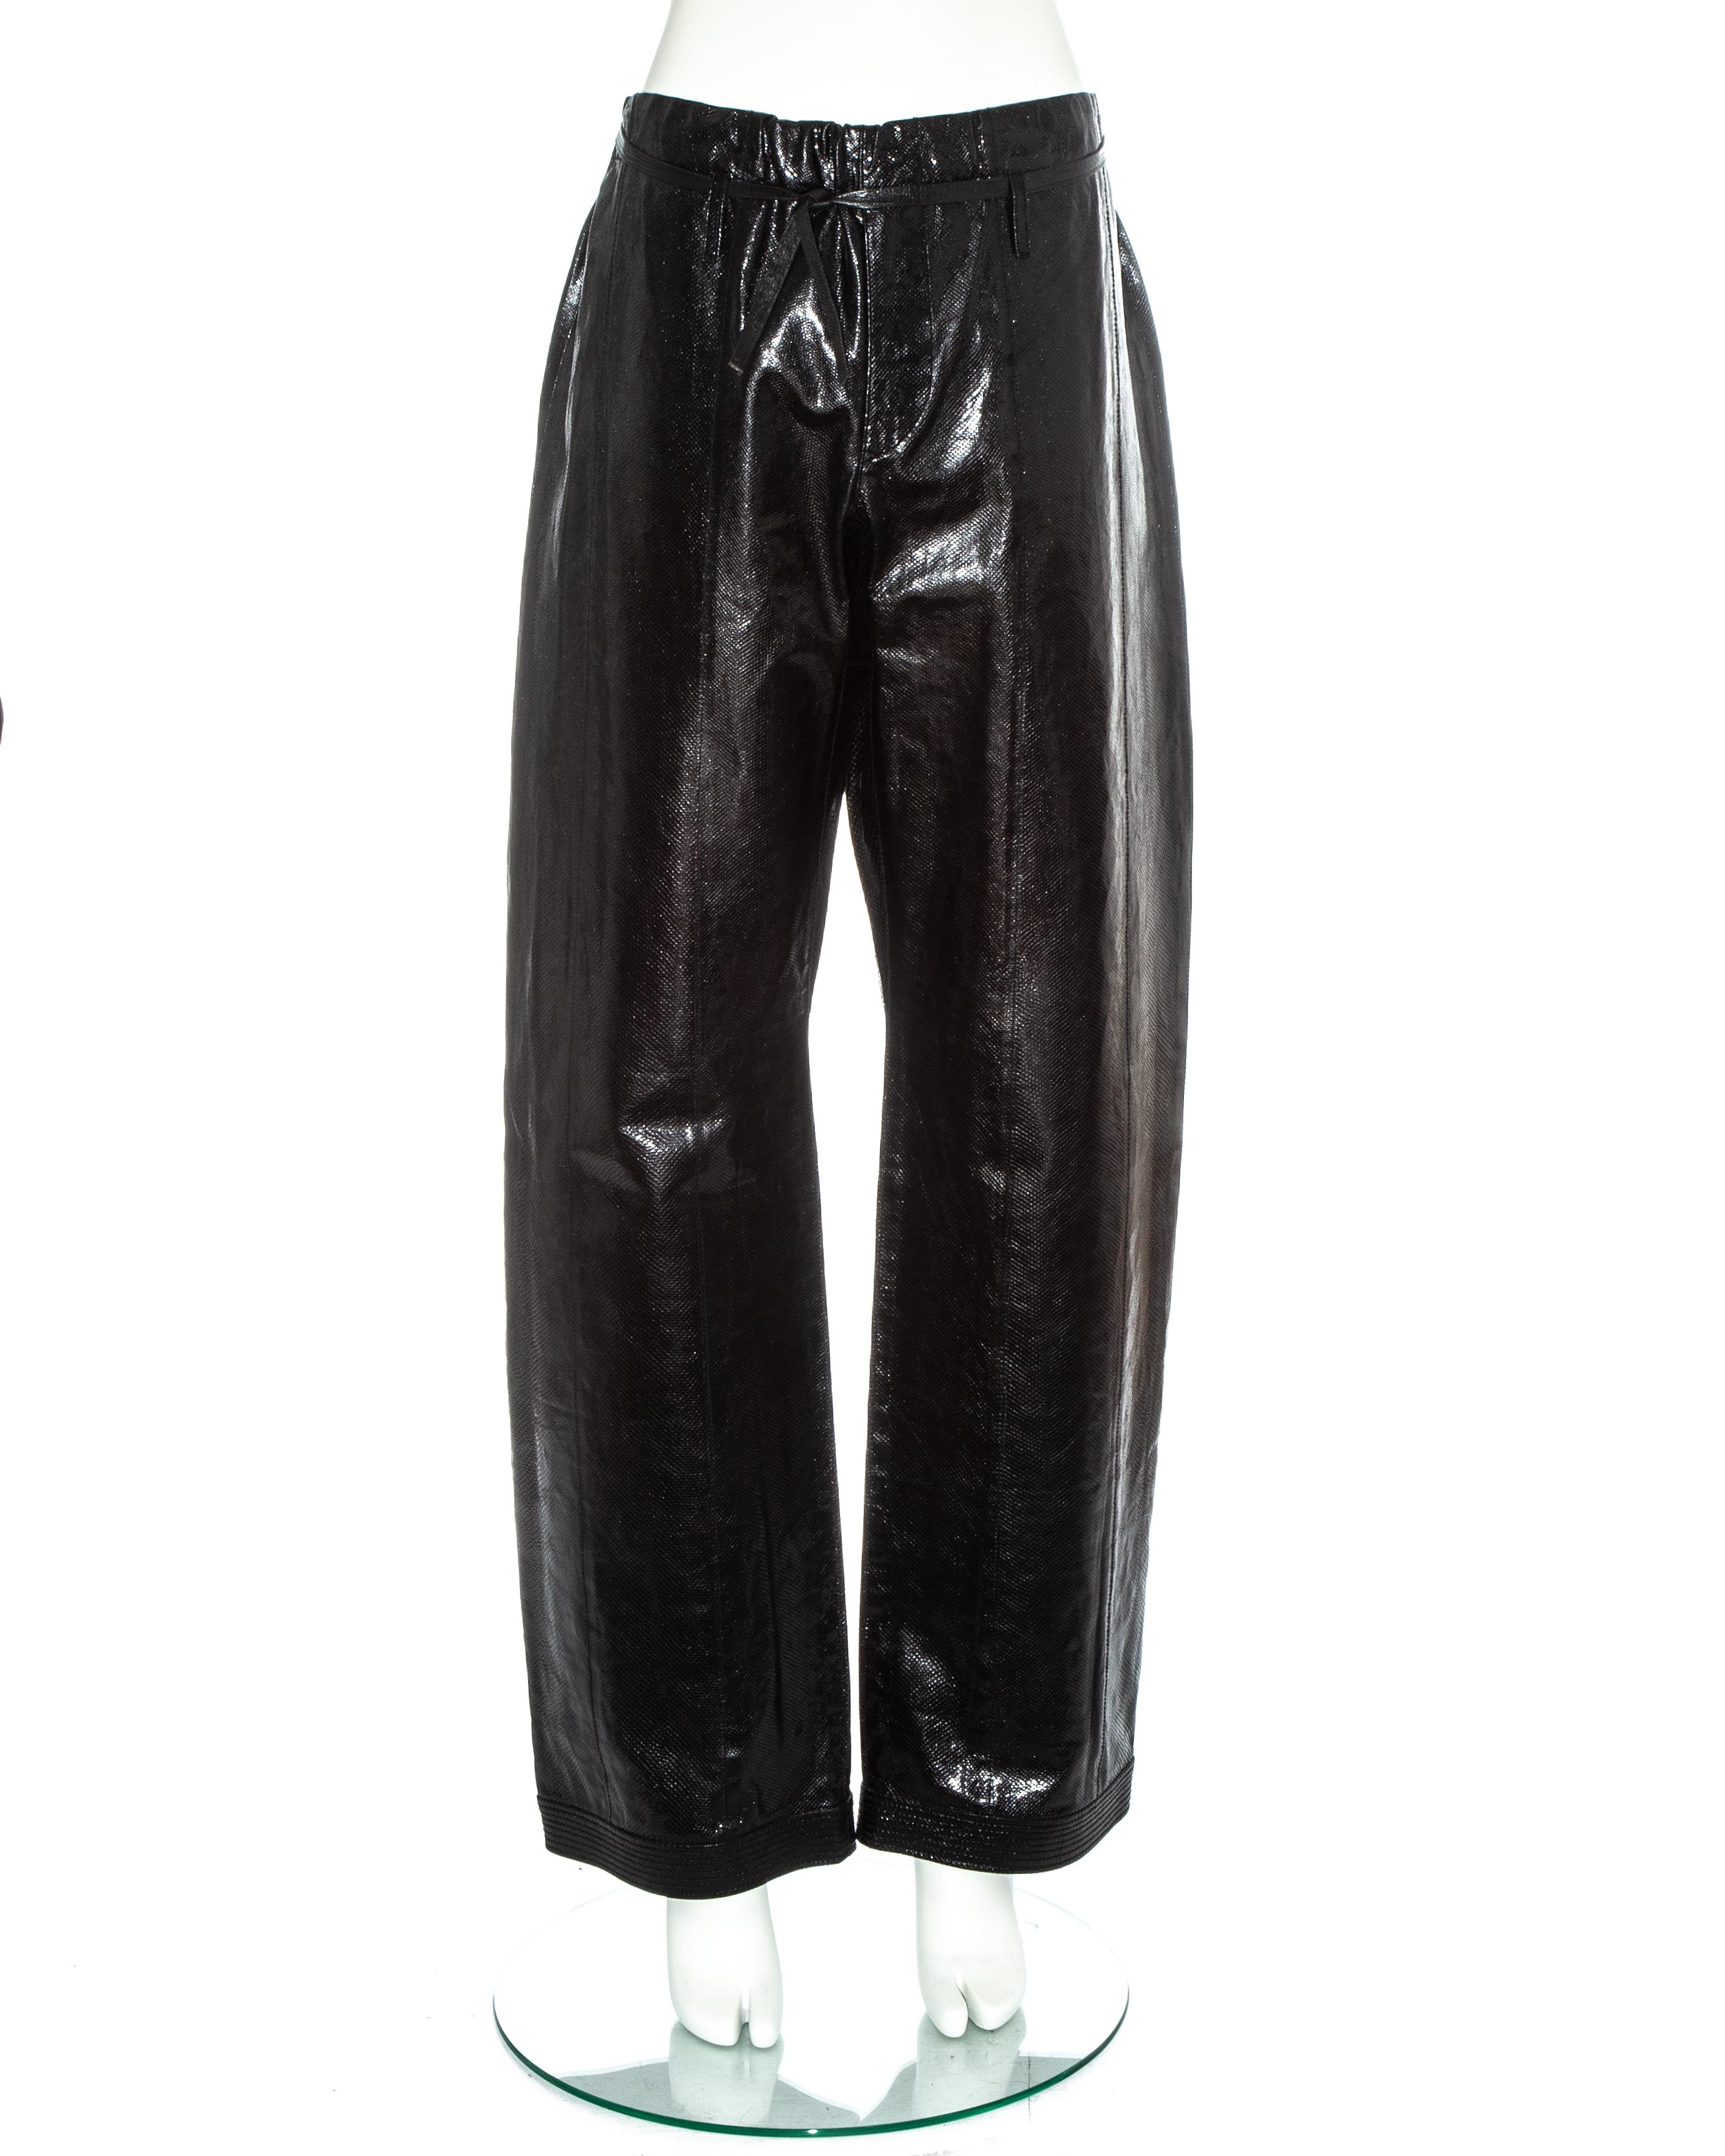 Gucci by Tom Ford; unisex black lizard skin wide leg drawstring evening pants

Spring-Summer 2001